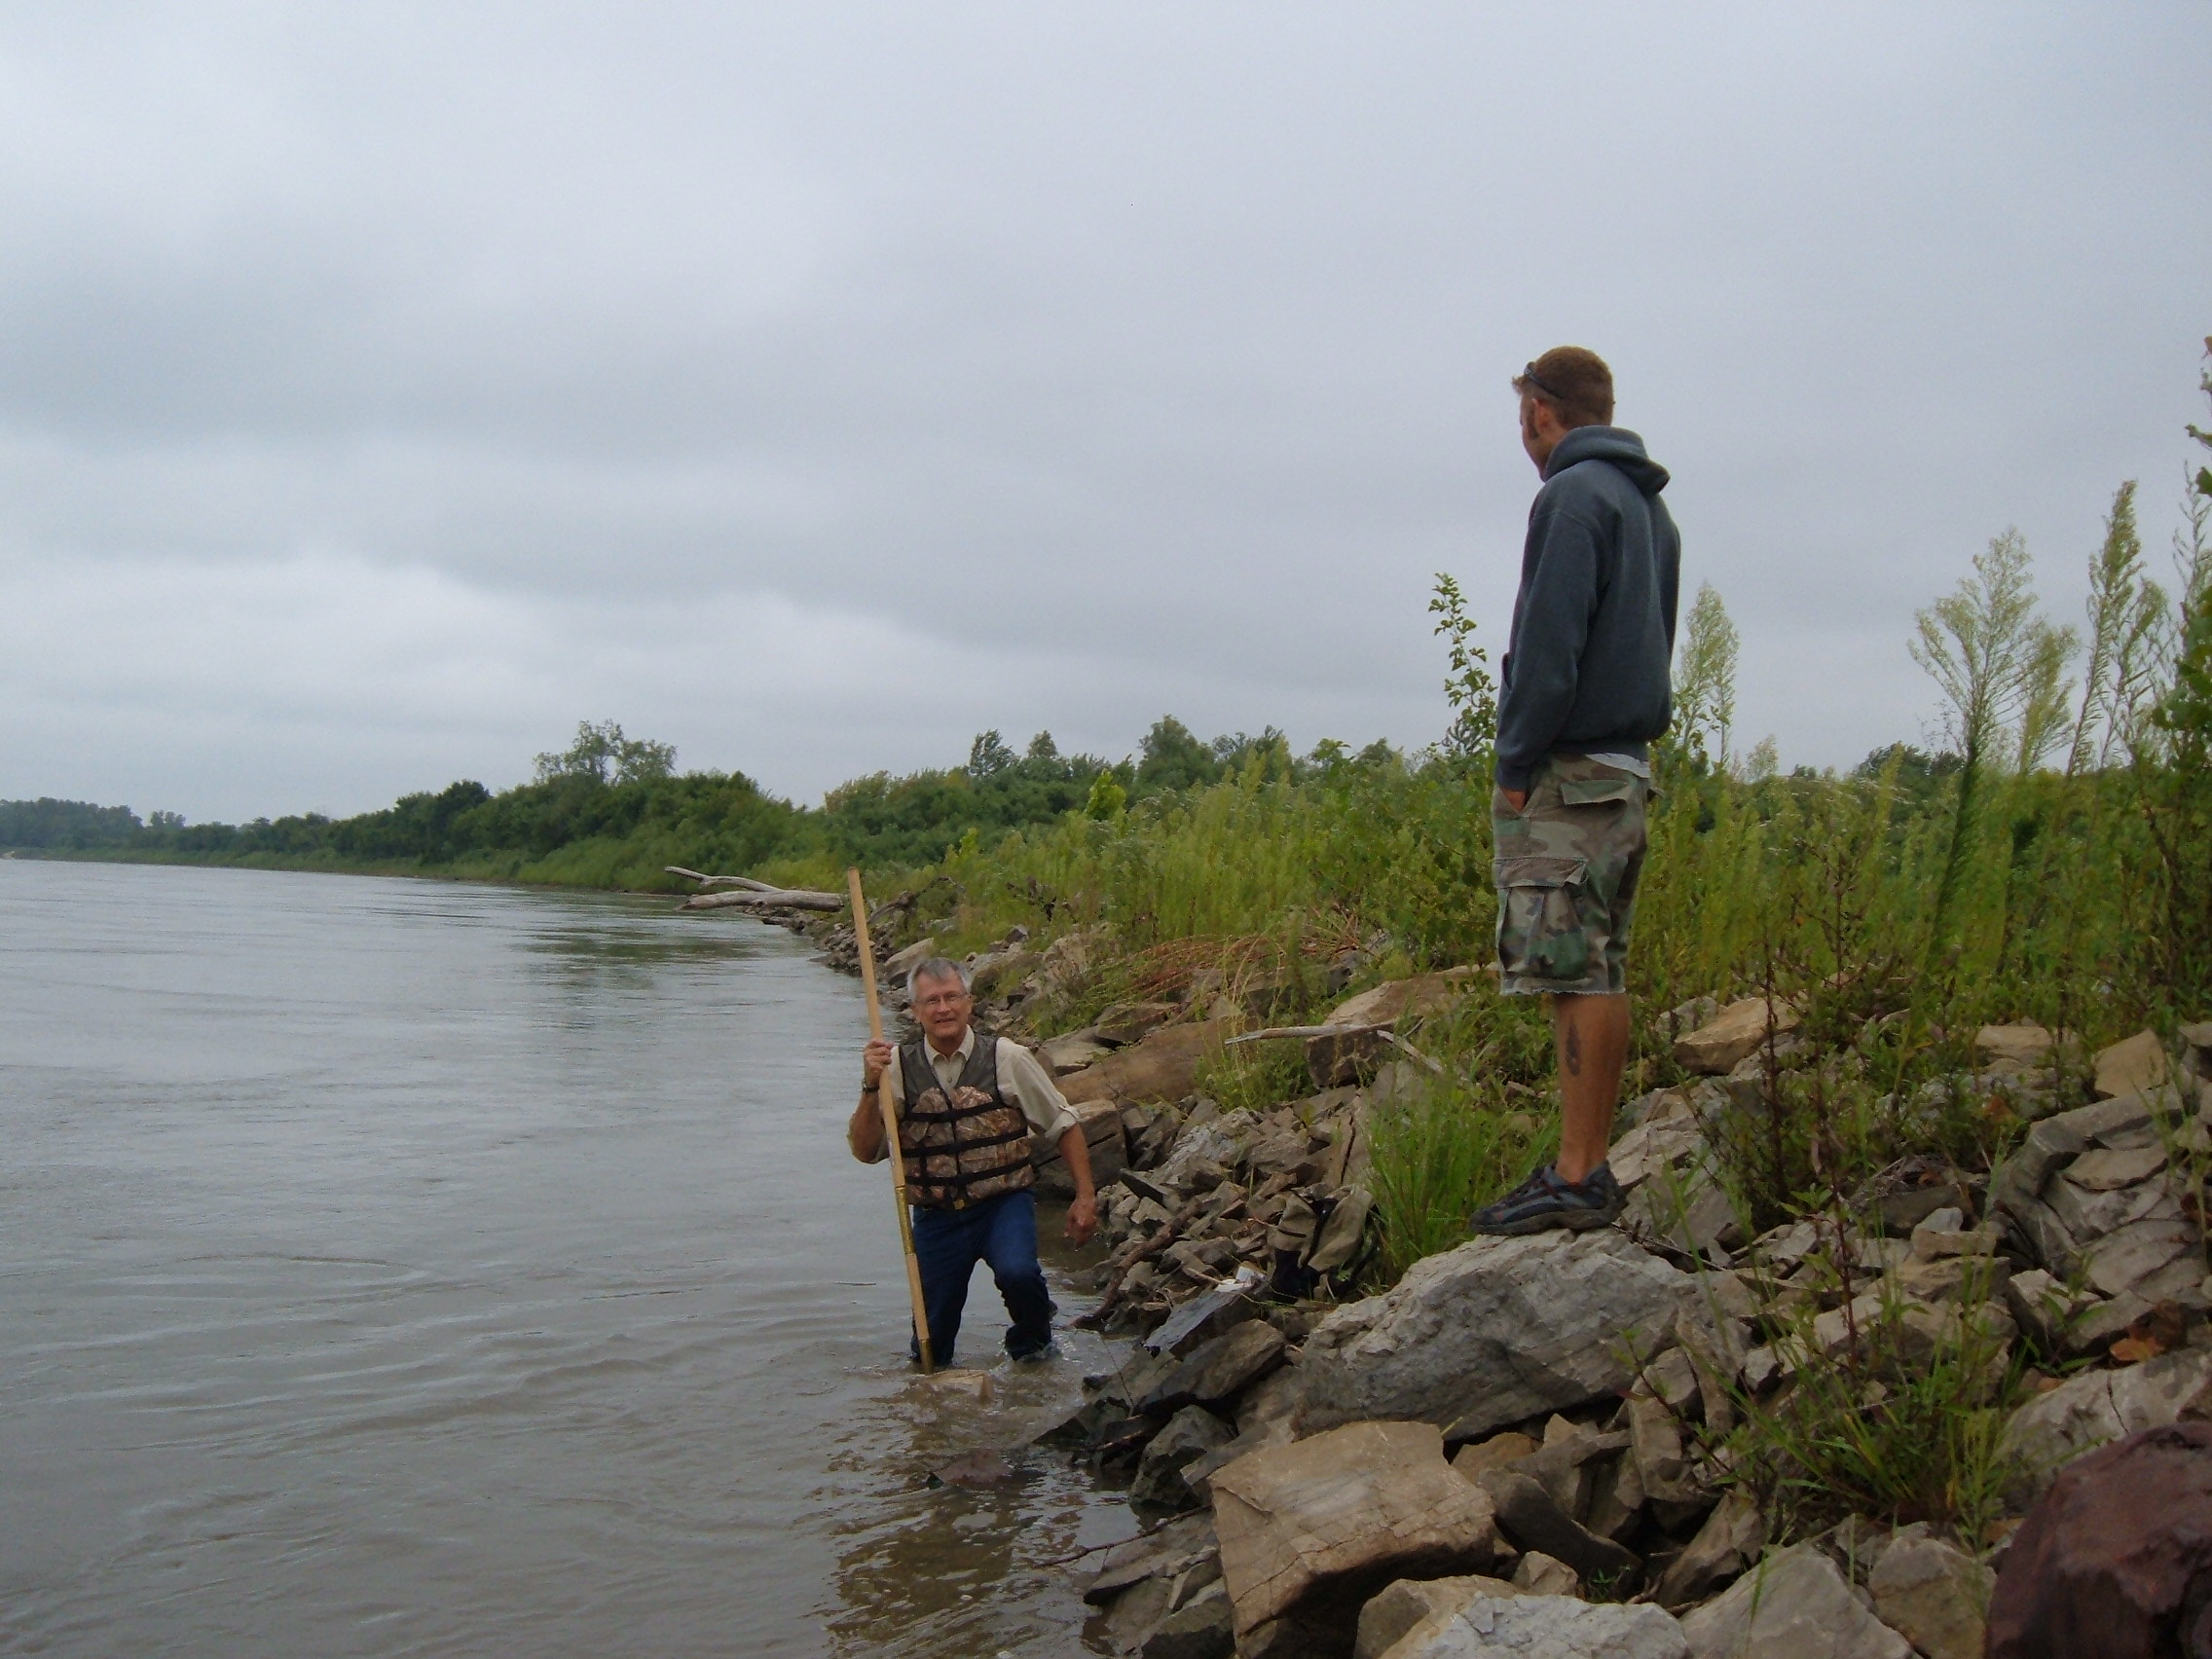 Don Huggins Samples macroinvertebrates in the Missouri River near Atchison KS.